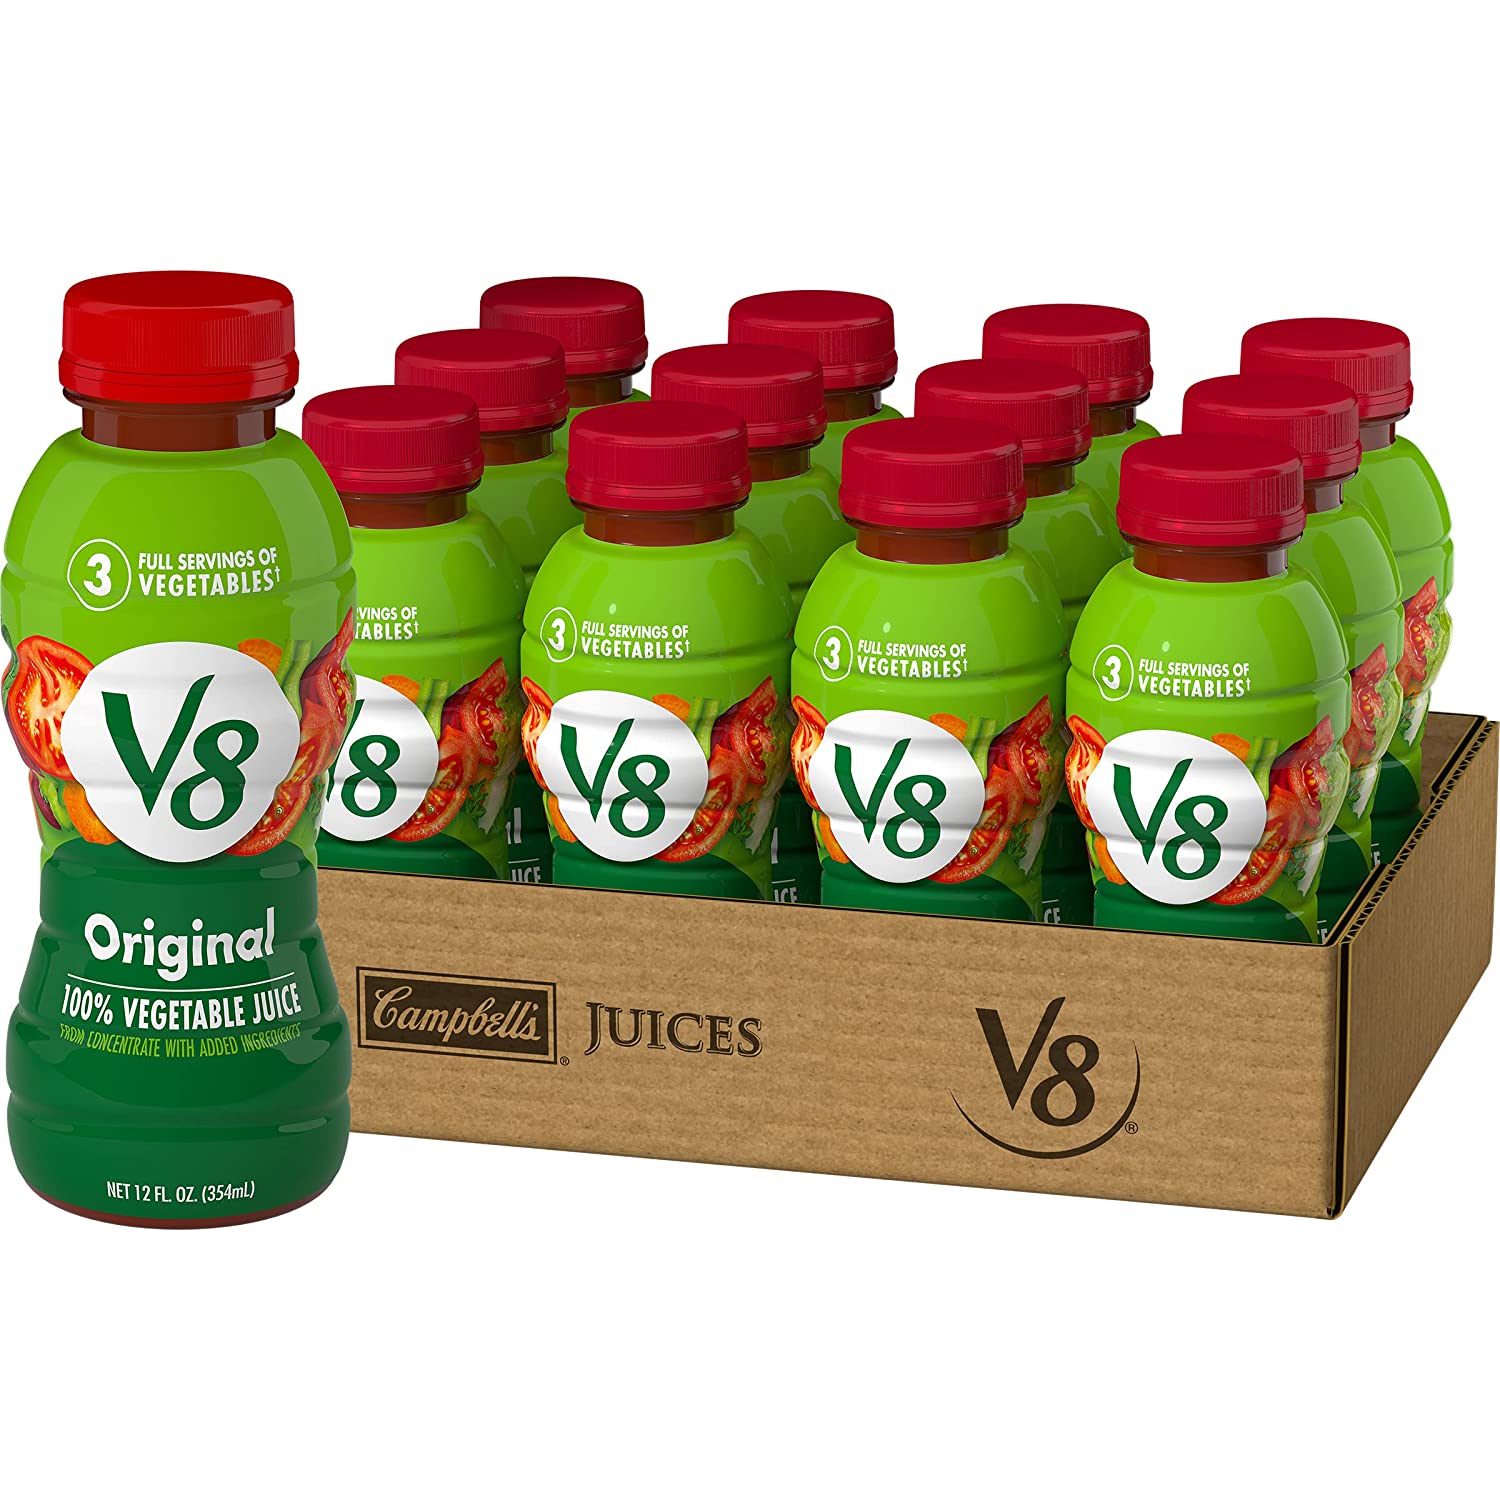 12-Pack 12-Oz V8 Original 100% Vegetable Juice Bottles $13.26 w/ S&S + Free Shipping w/ Prime or on orders over $25